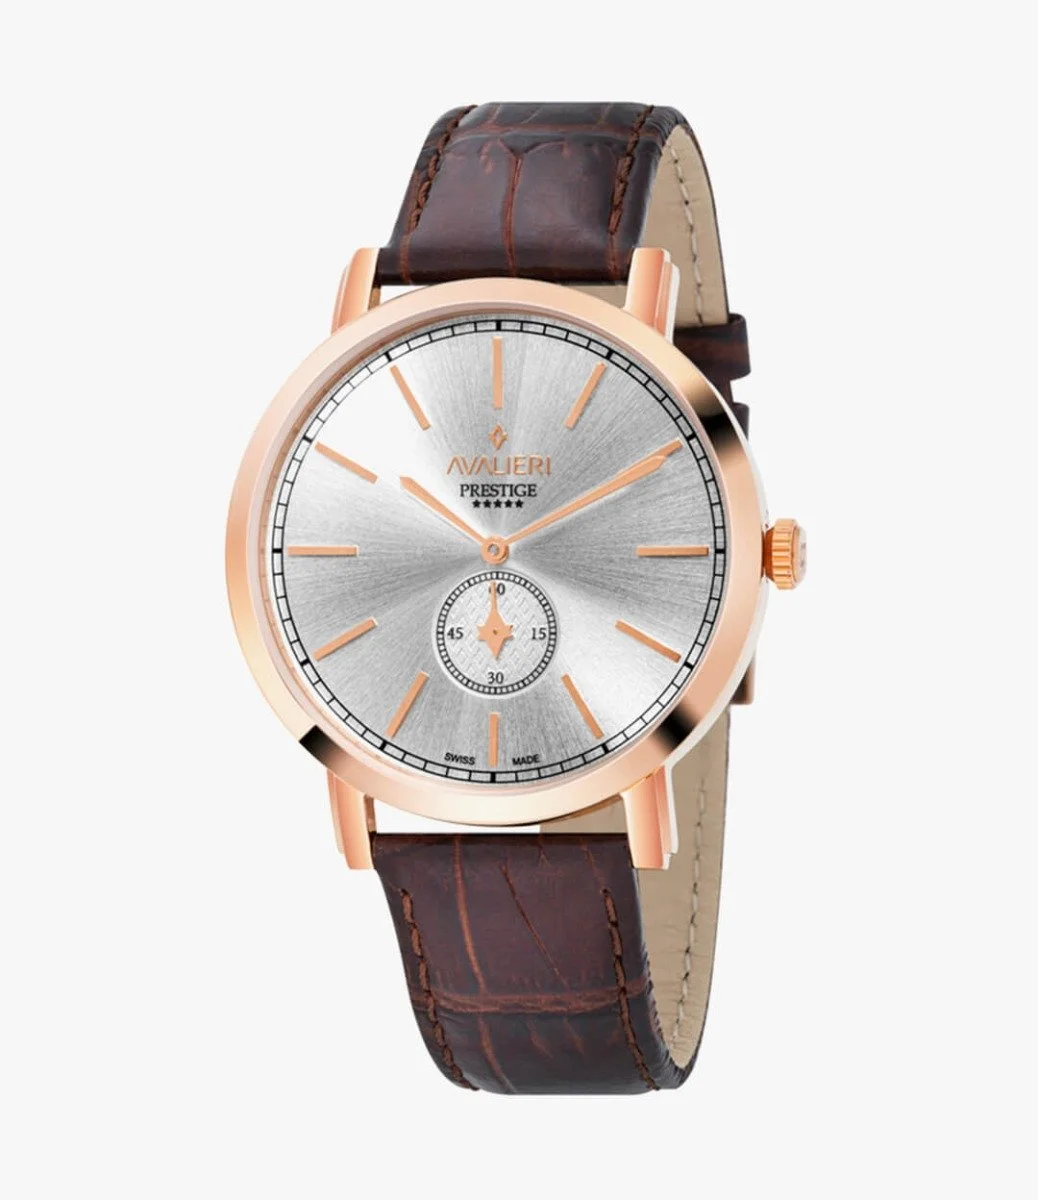 Avalieri Prestige Brown Leather Watch